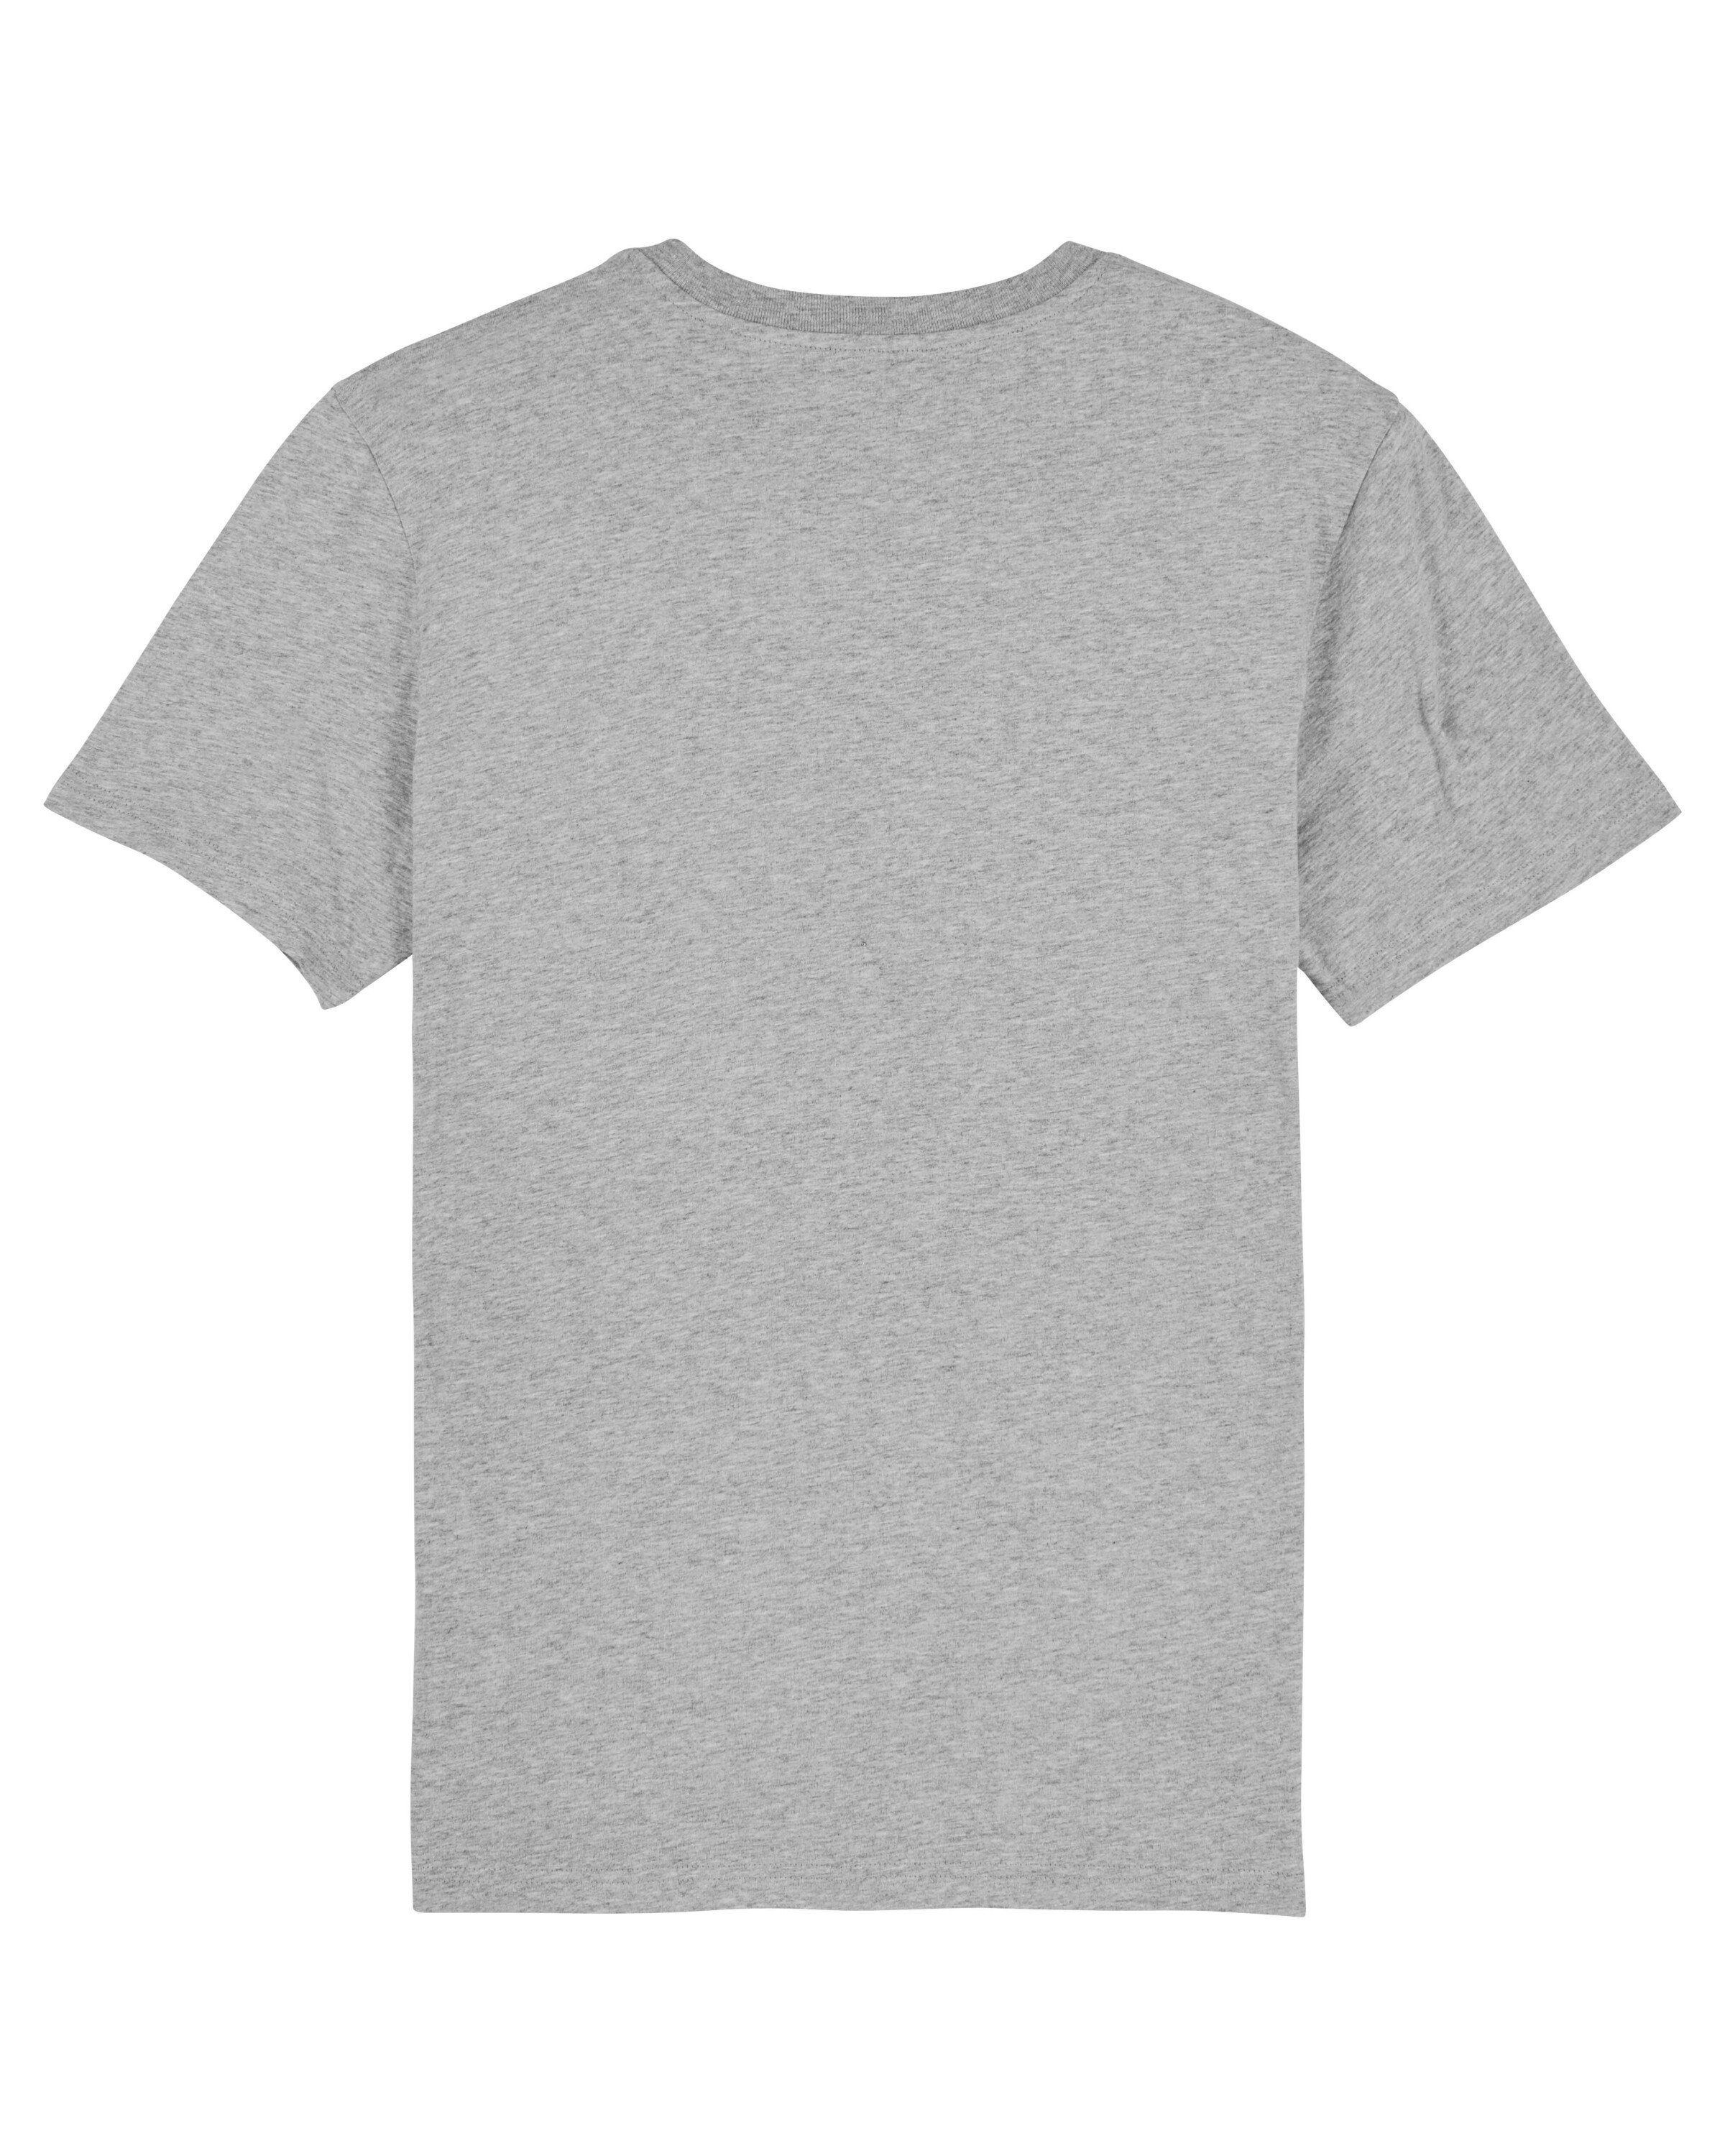 (1-tlg) Print-Shirt Apparel grau meliert wat? Häsin